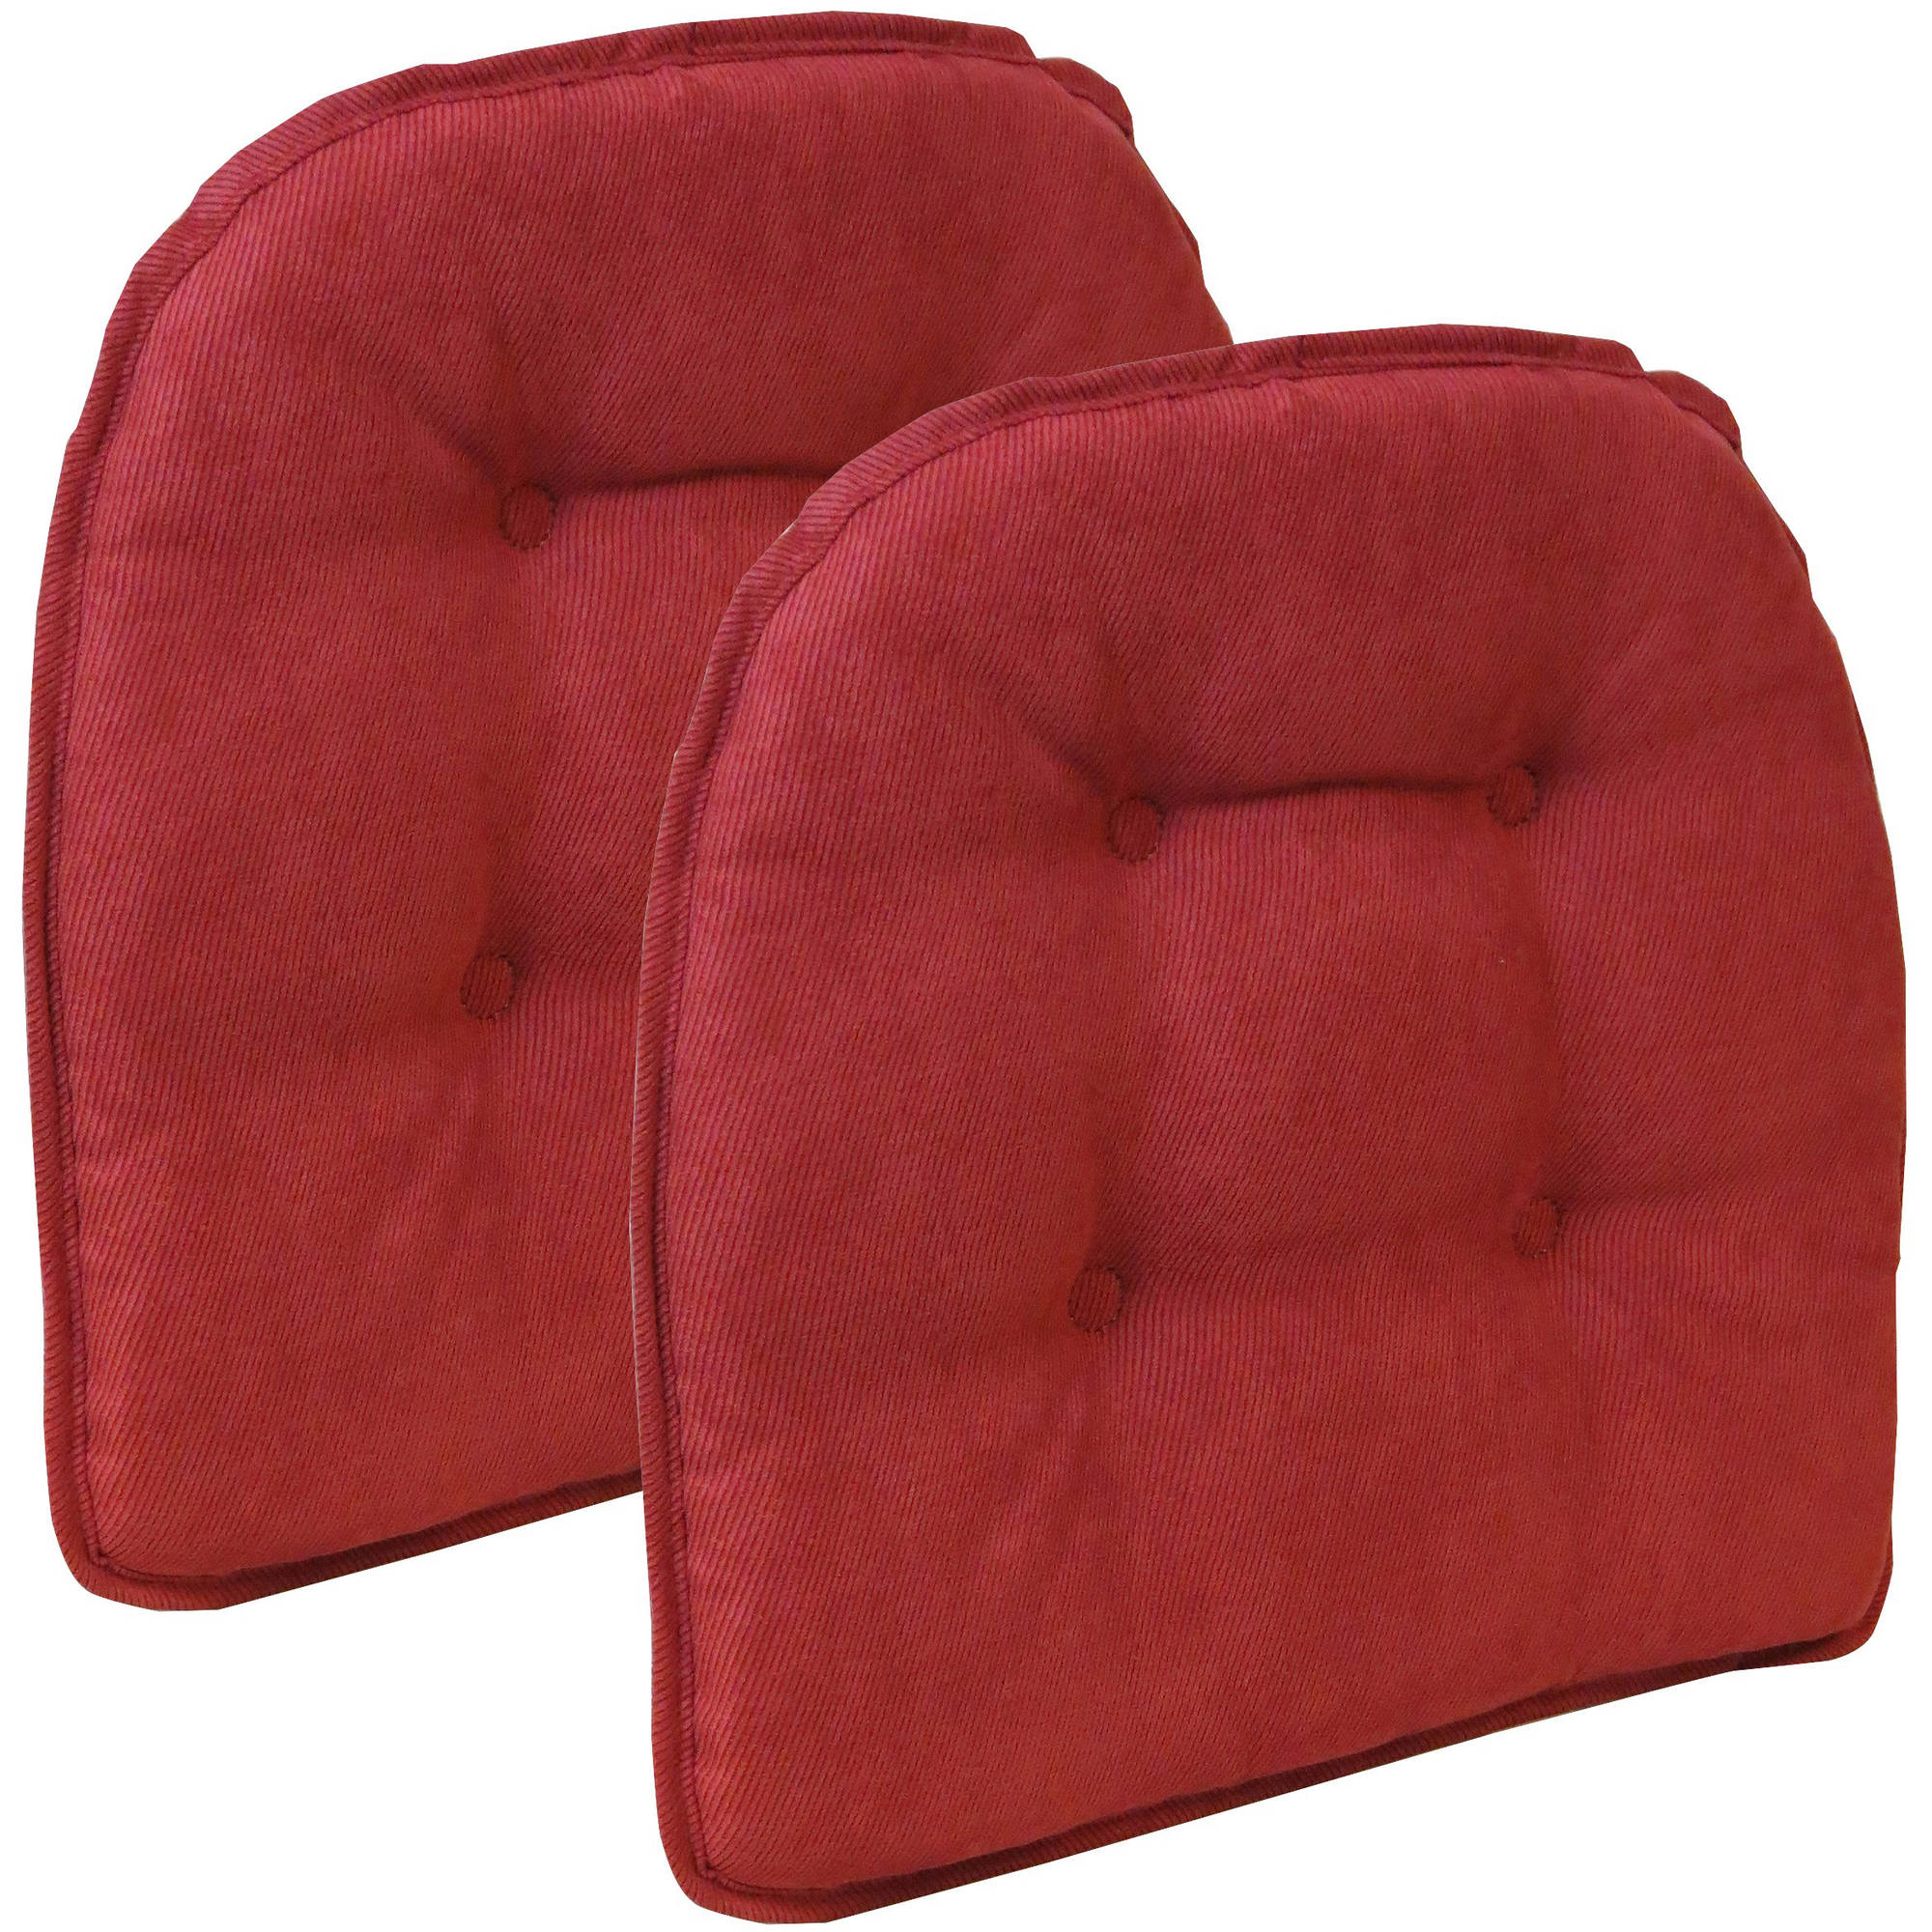 U-Shaped Memory Foam No Slip Back 16 x 17 Faux Leather Chair Pad Cushion 6  Pack - Brown